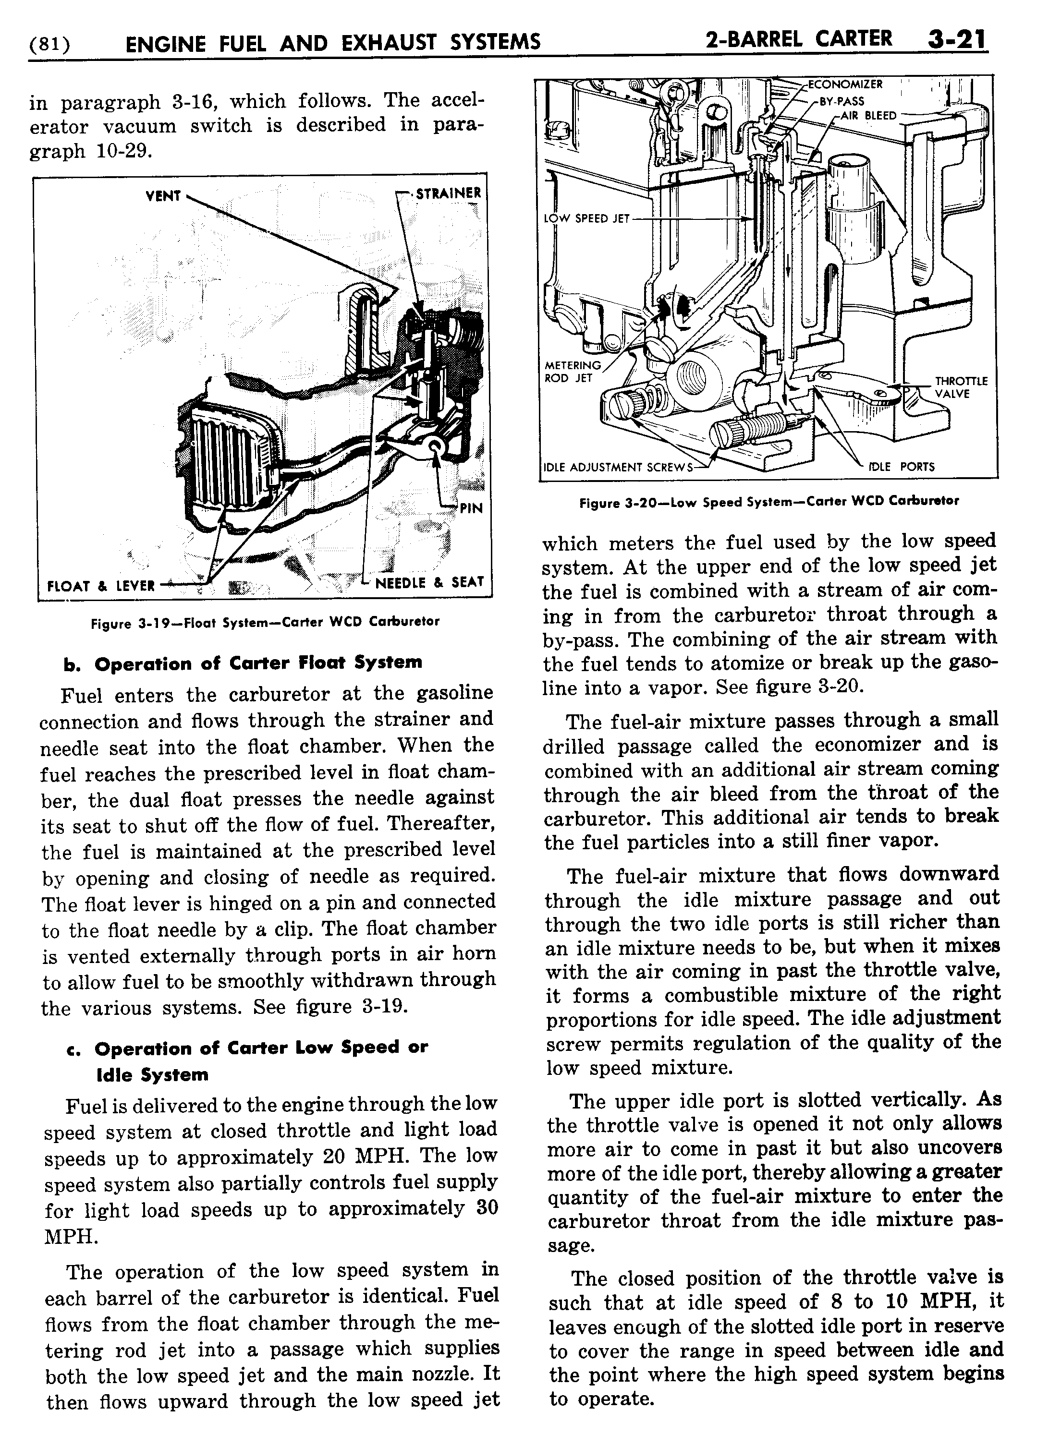 n_04 1955 Buick Shop Manual - Engine Fuel & Exhaust-021-021.jpg